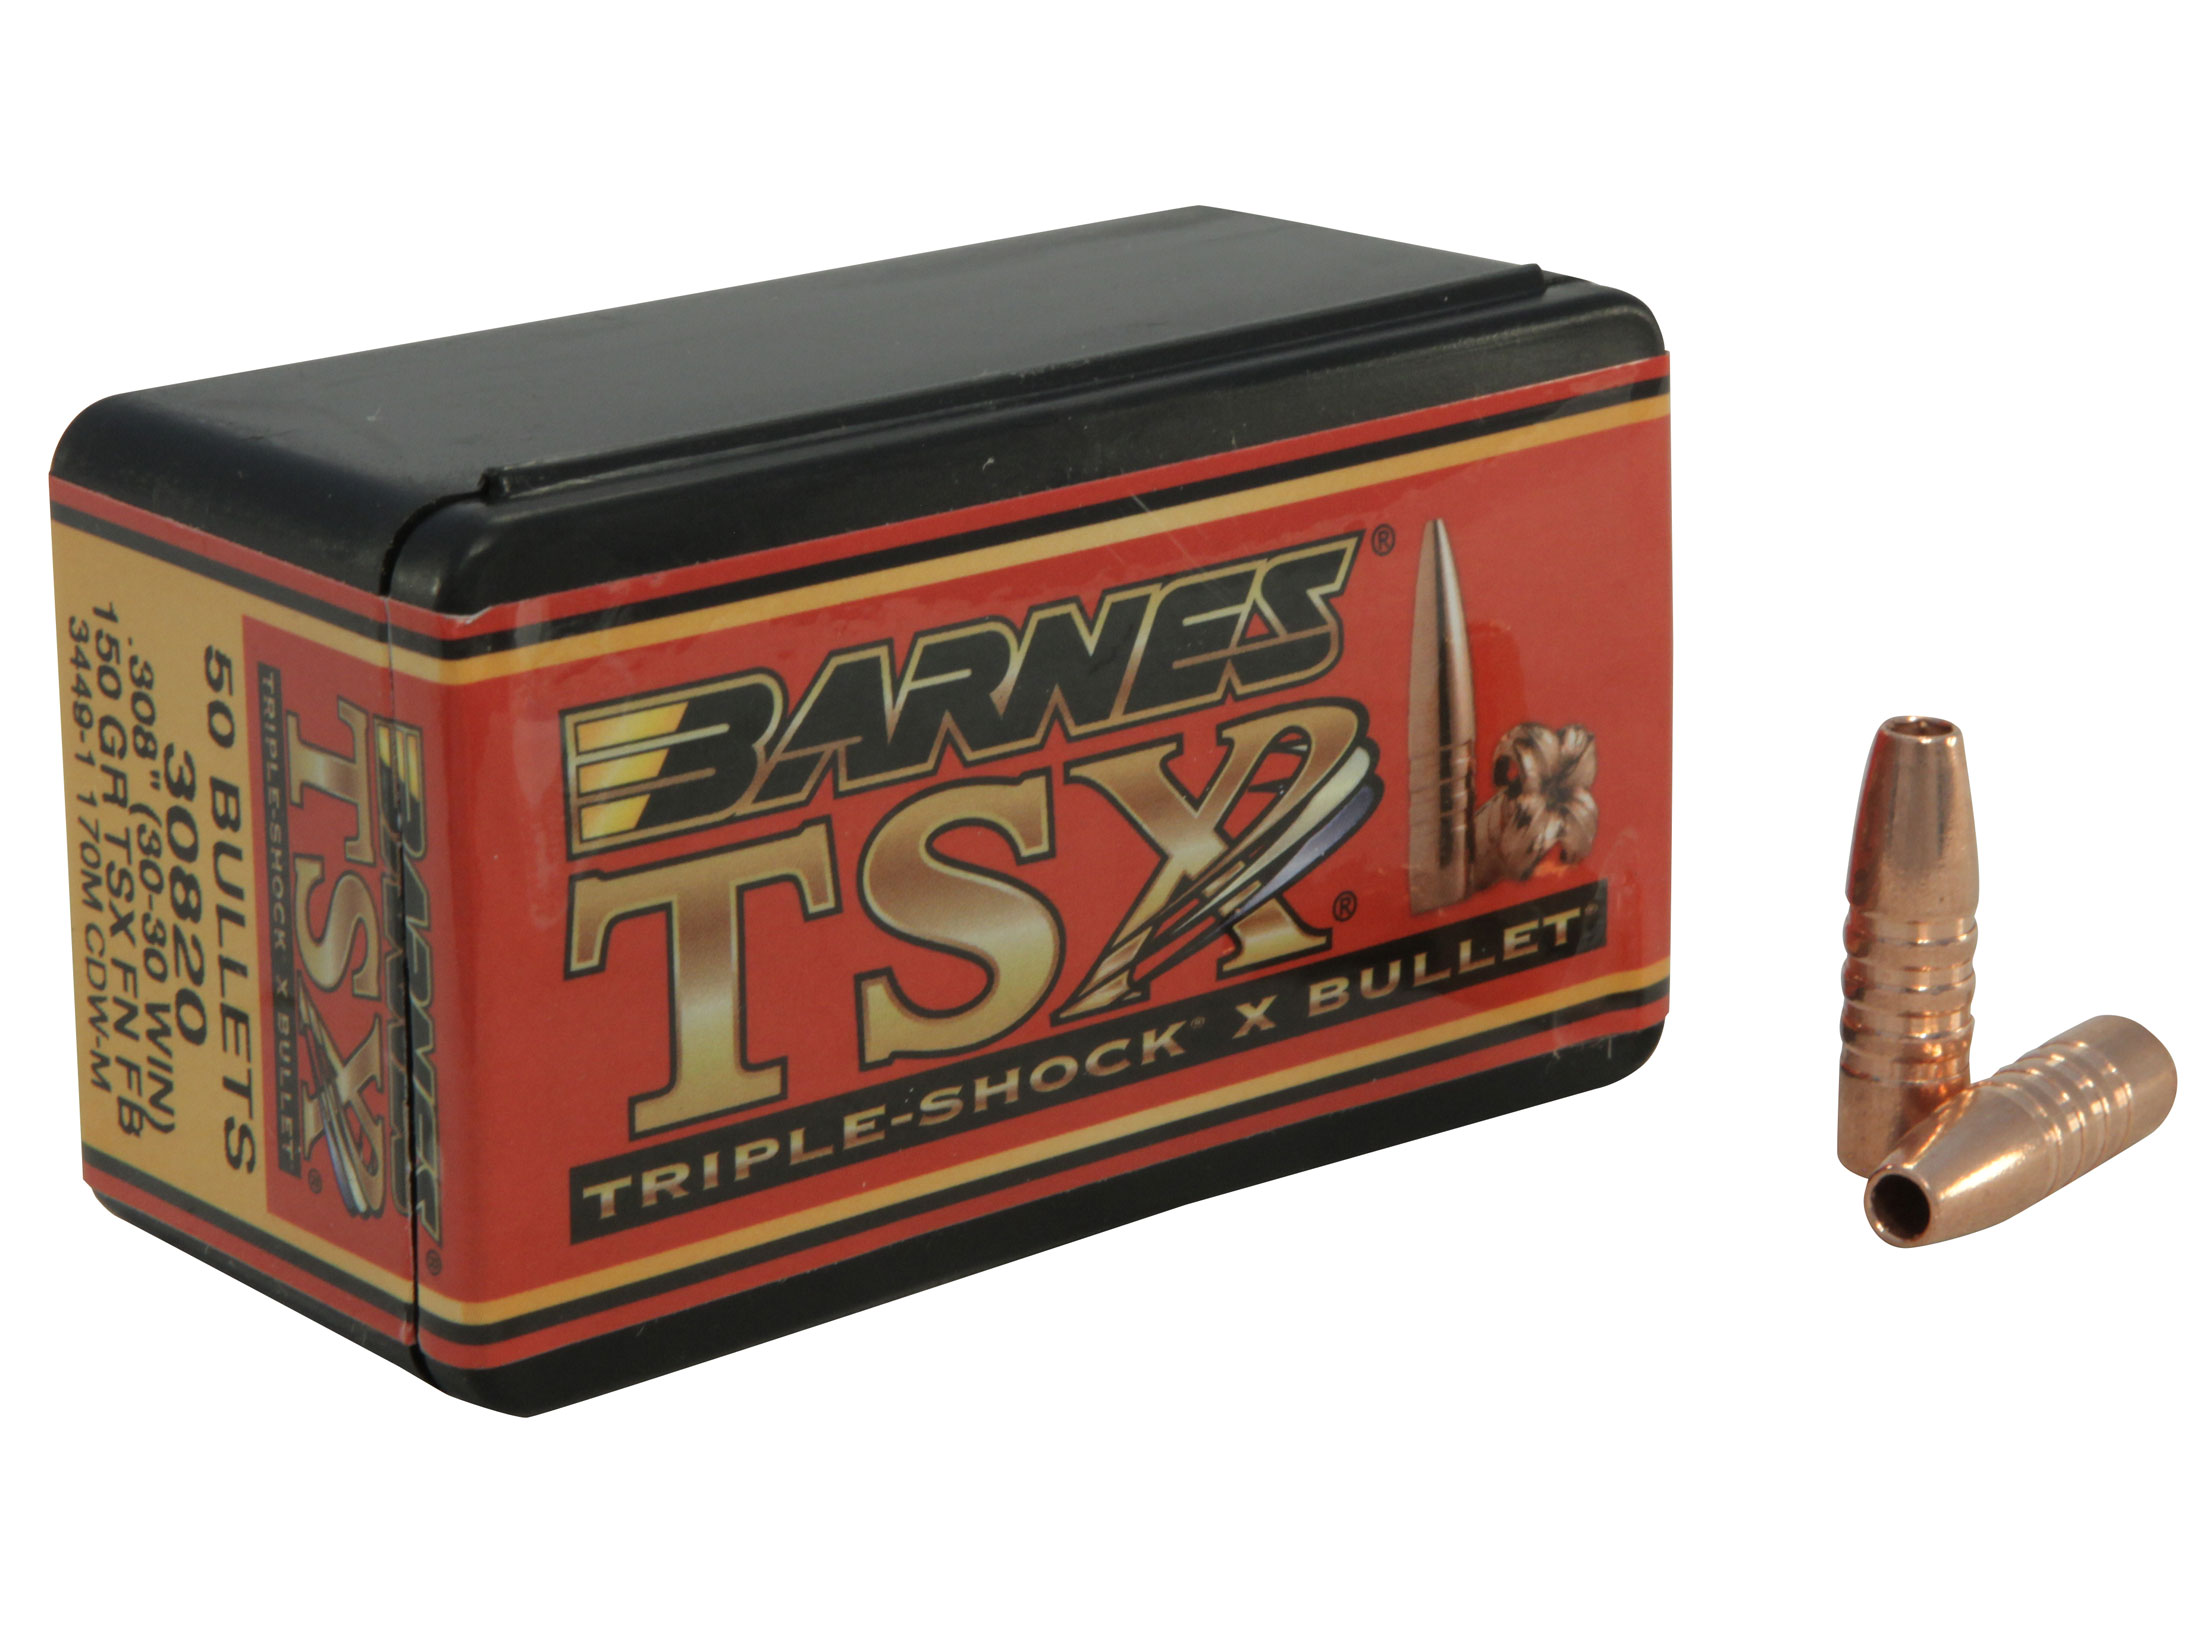 Barnes Triple-Shock X (TSX) Bullets 30-30 Cal (308 Diameter) 150 Grain